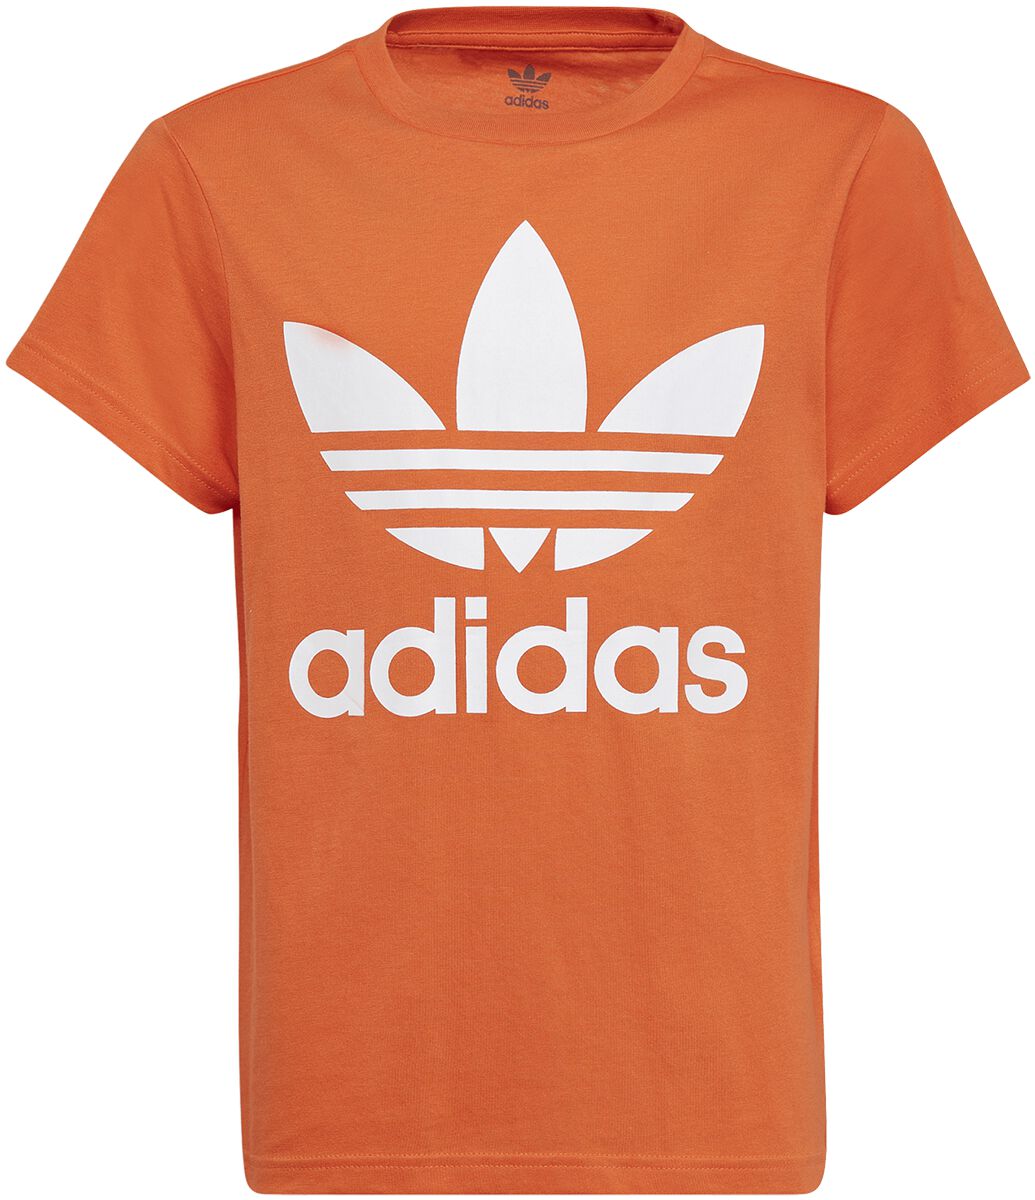 Adidas Trefoil Tee T-Shirt orange